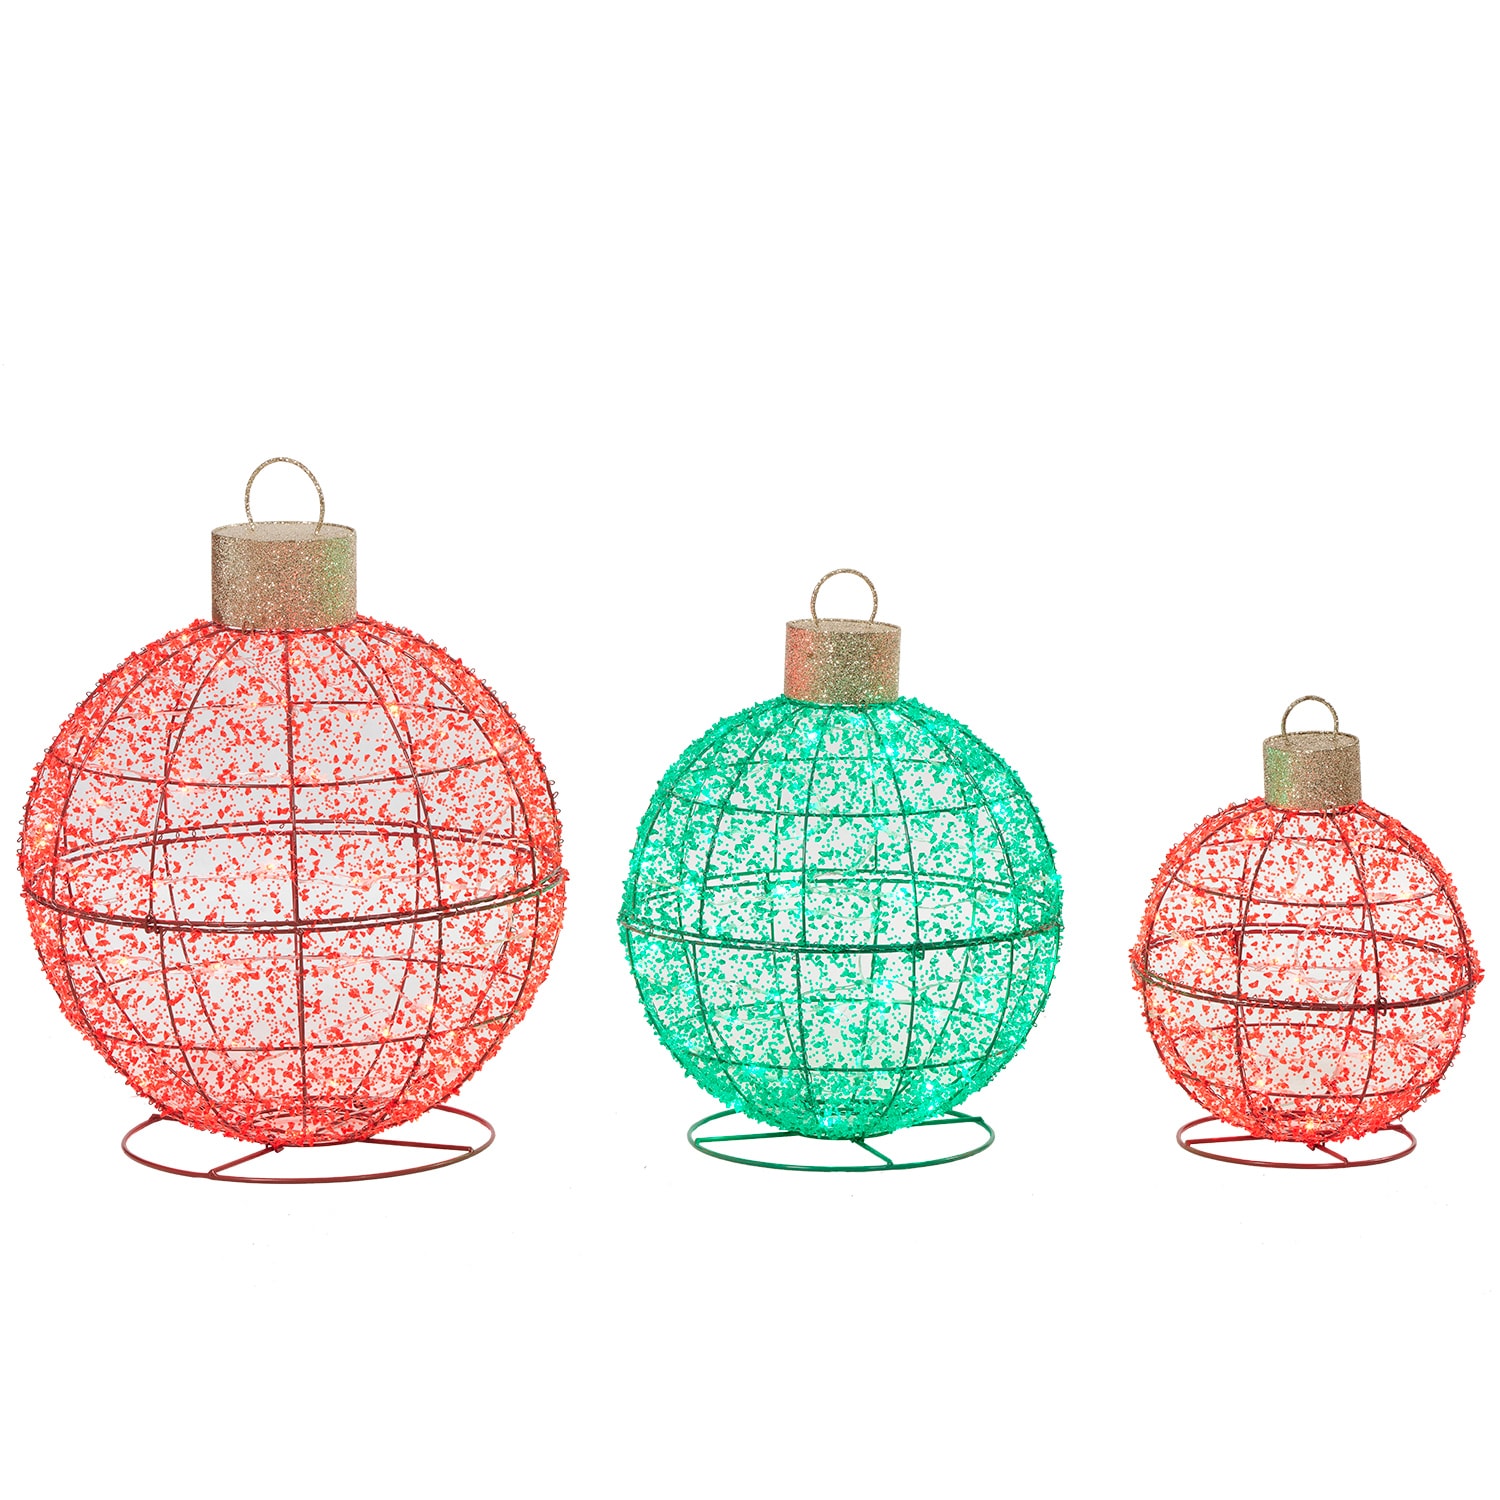 4 LED Christmas Ball Ornament, Lighted Hanging Plastic Ball